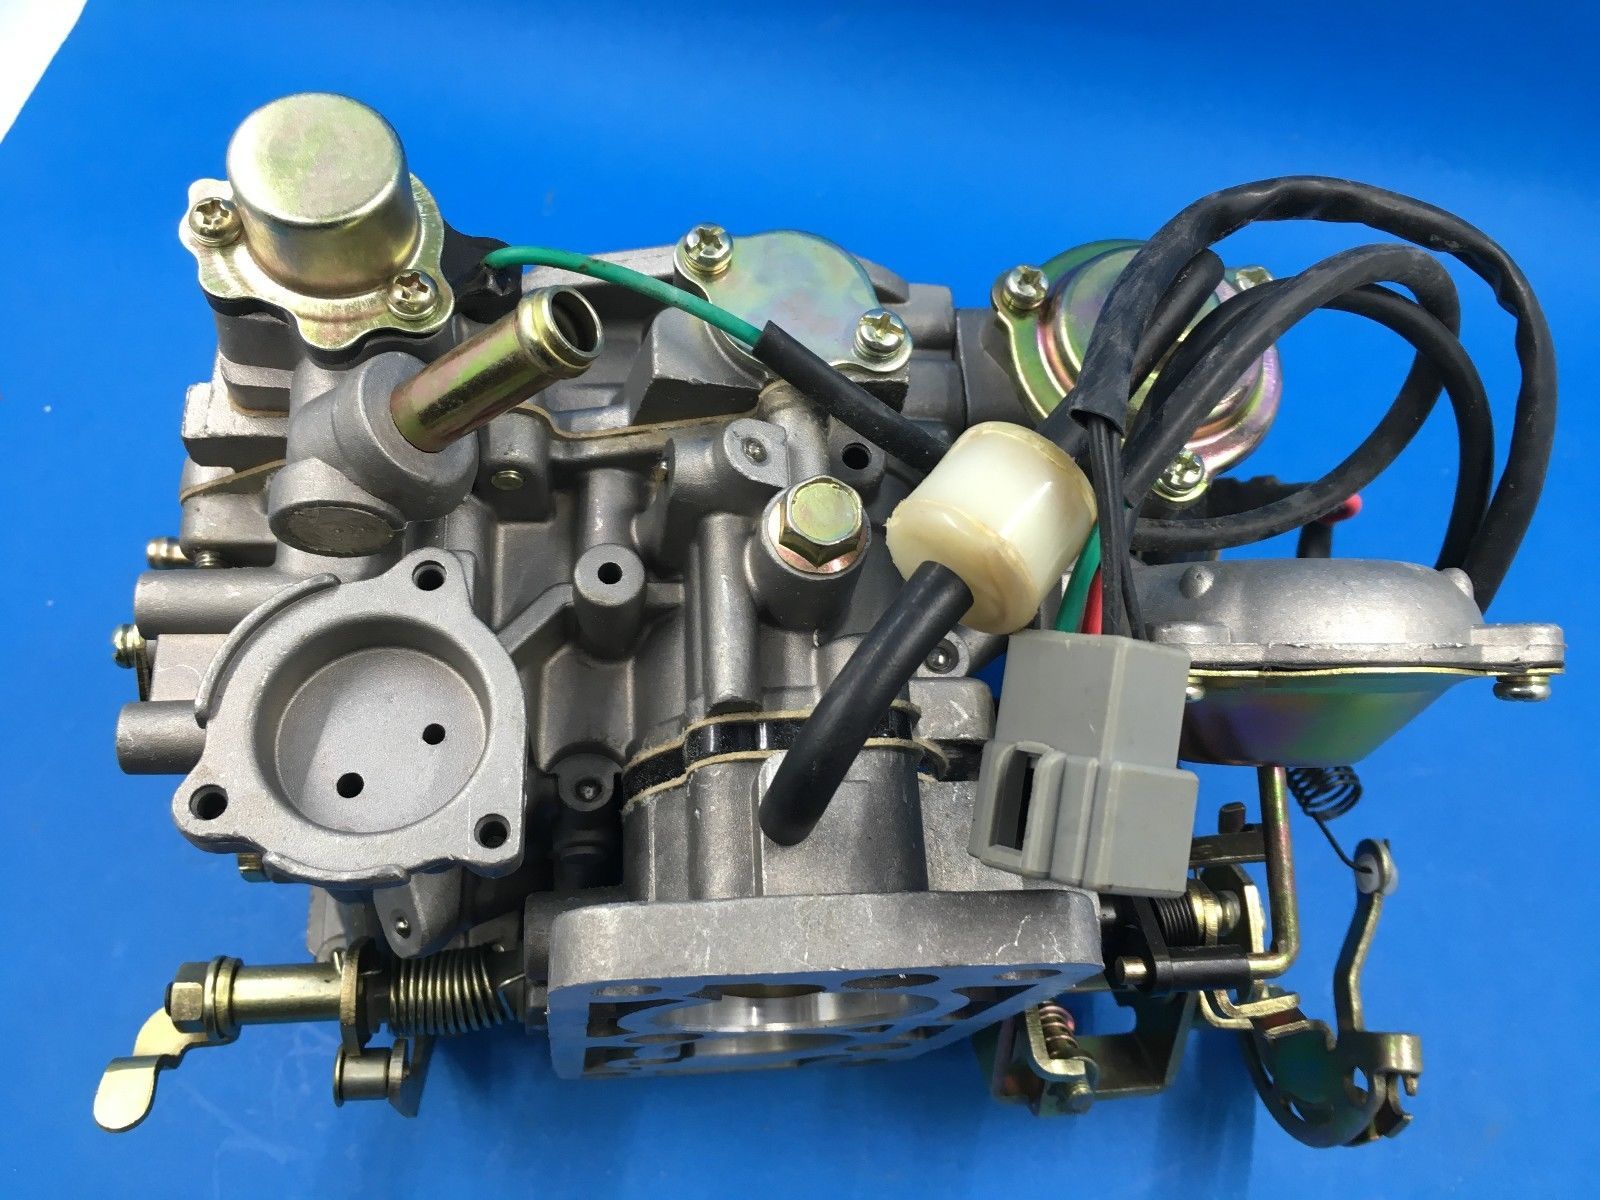 2020 Carb Carburetor Fit Toyota Van Hilux 4y 2 2l Engine On Sale From Performancepart 112 56 Dhgate Com